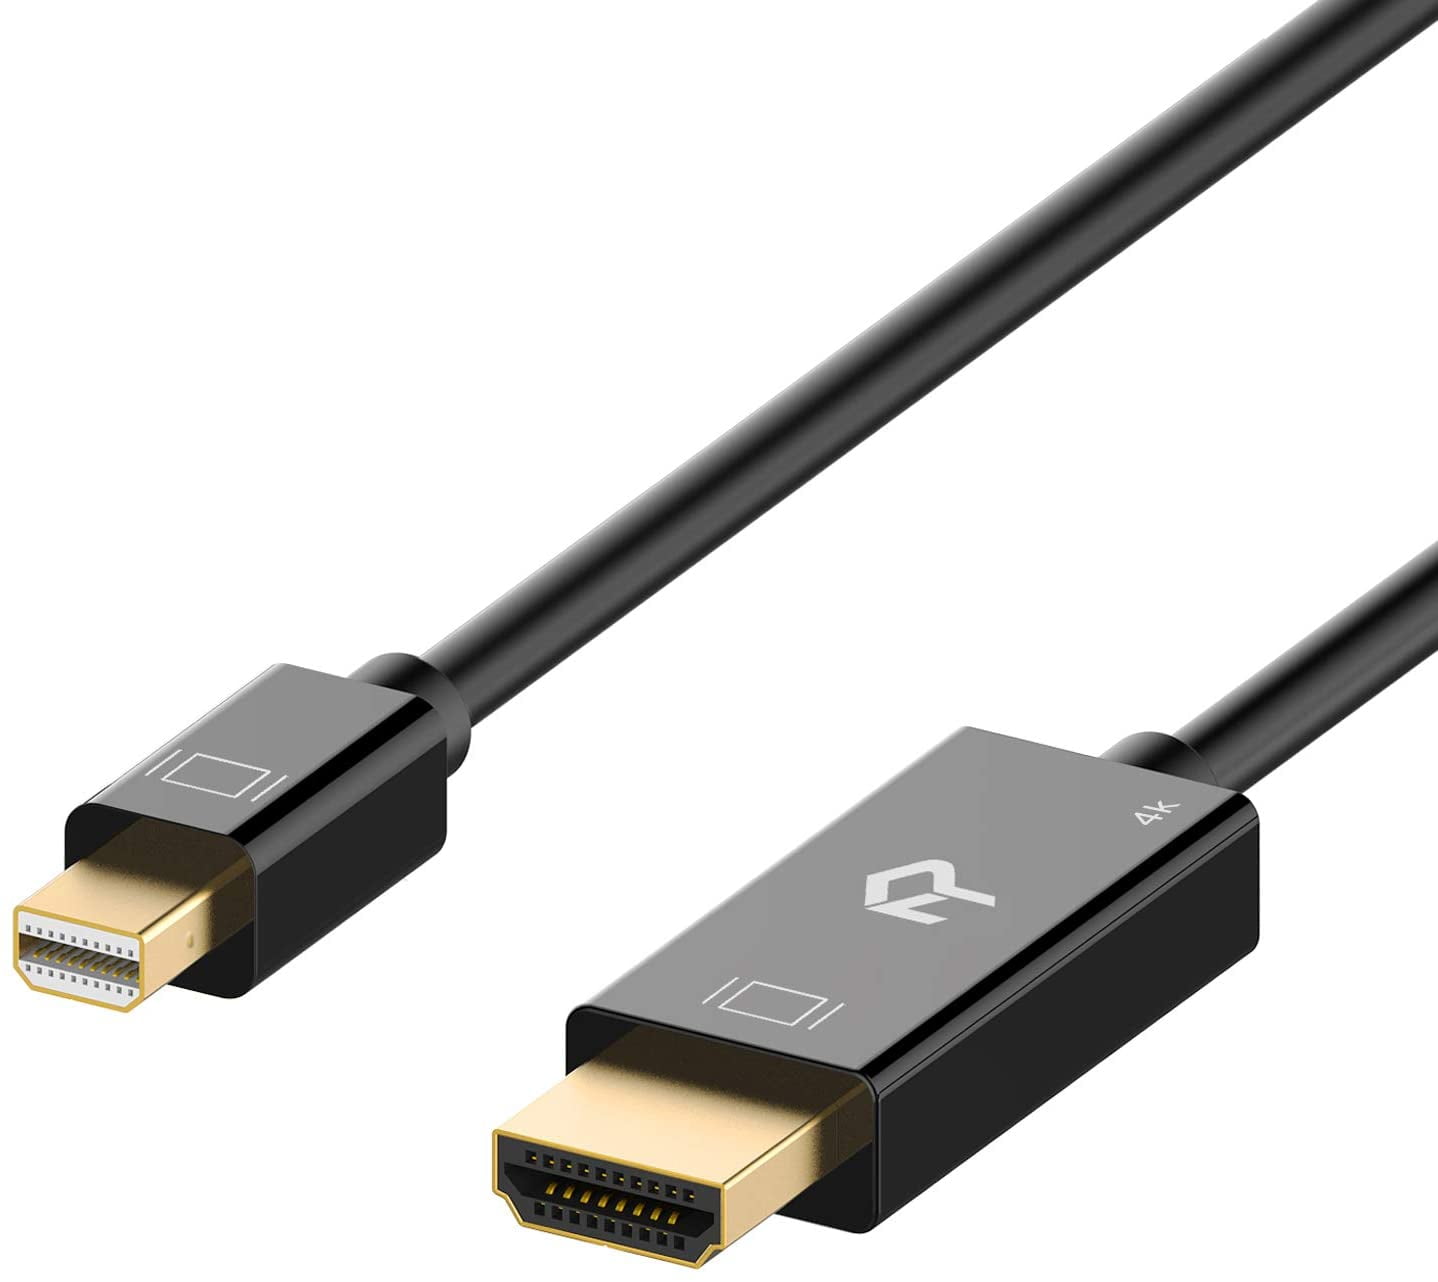 Rankie Mini (Mini DP) to HDMI Cable, 4K 6 Feet - Walmart.com